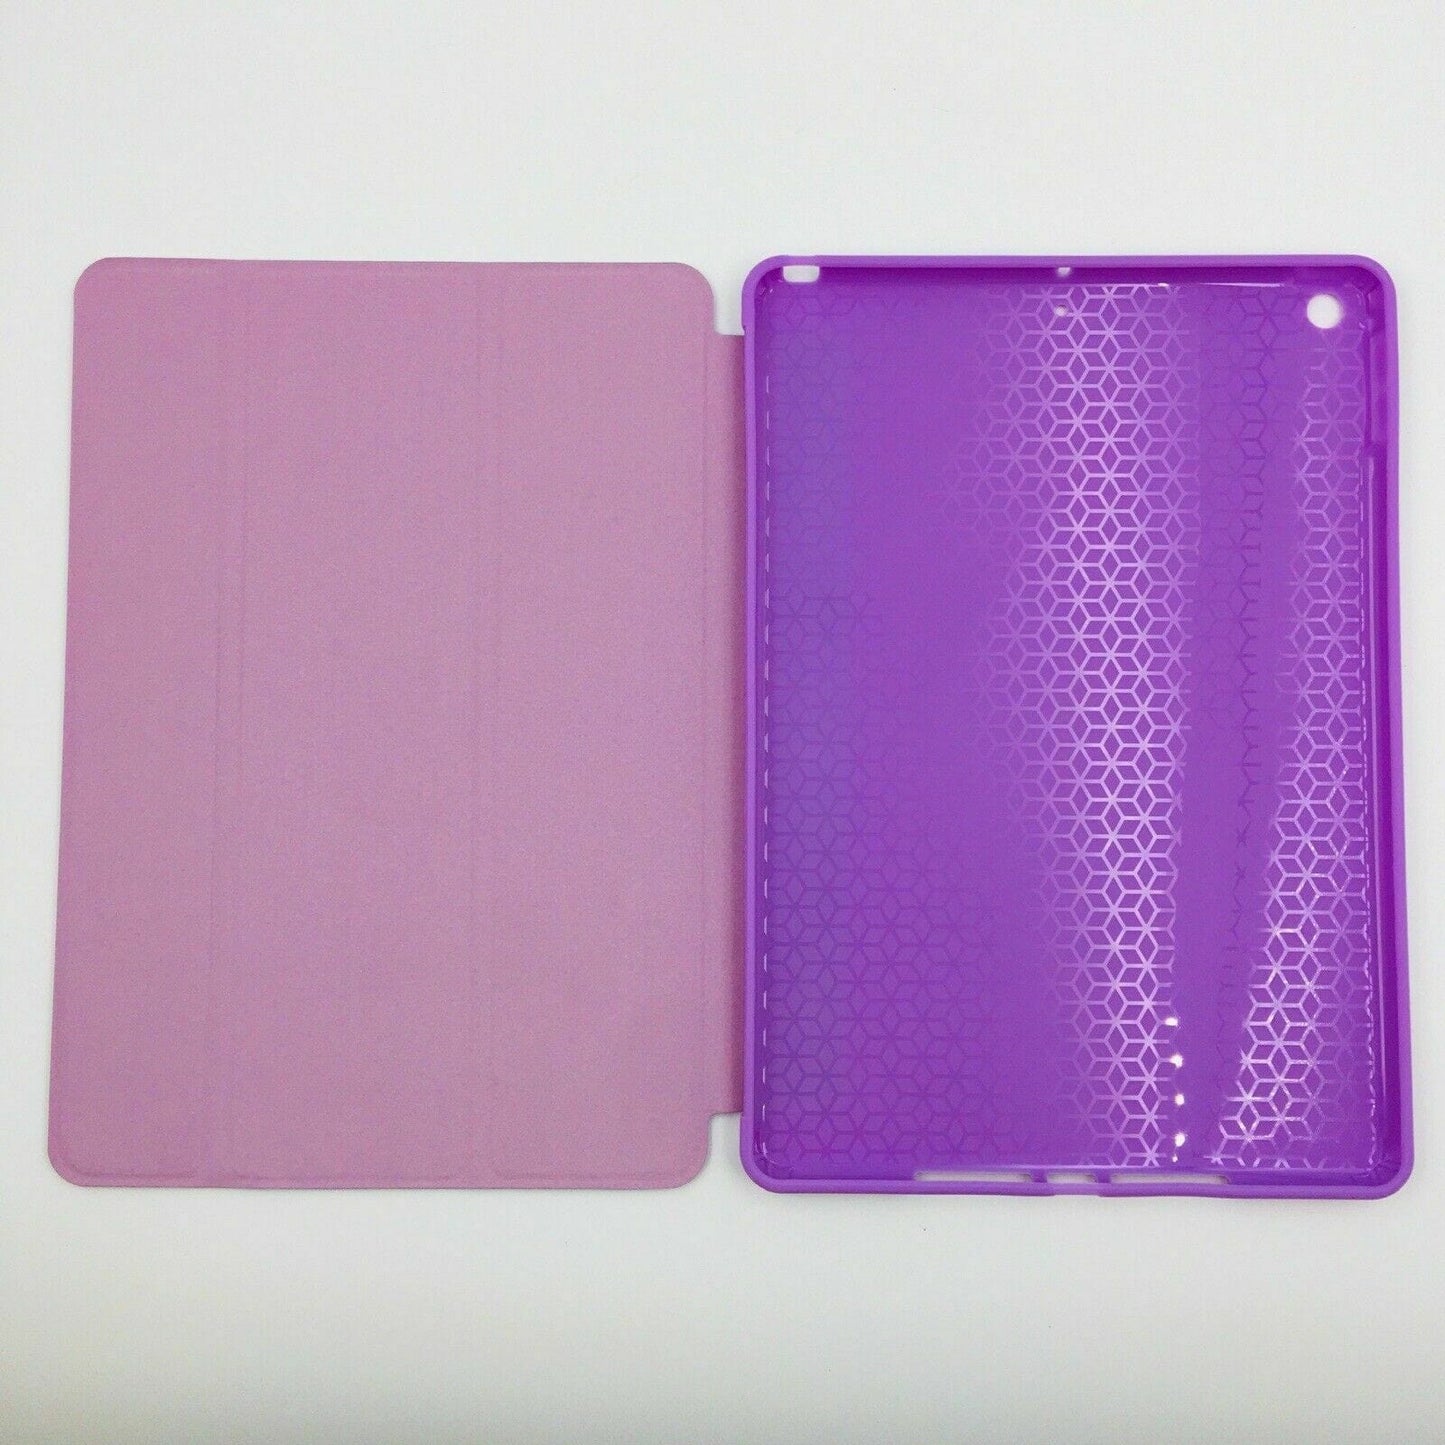 Soke iPad Soft Cover 7th Generation (2019) Purple